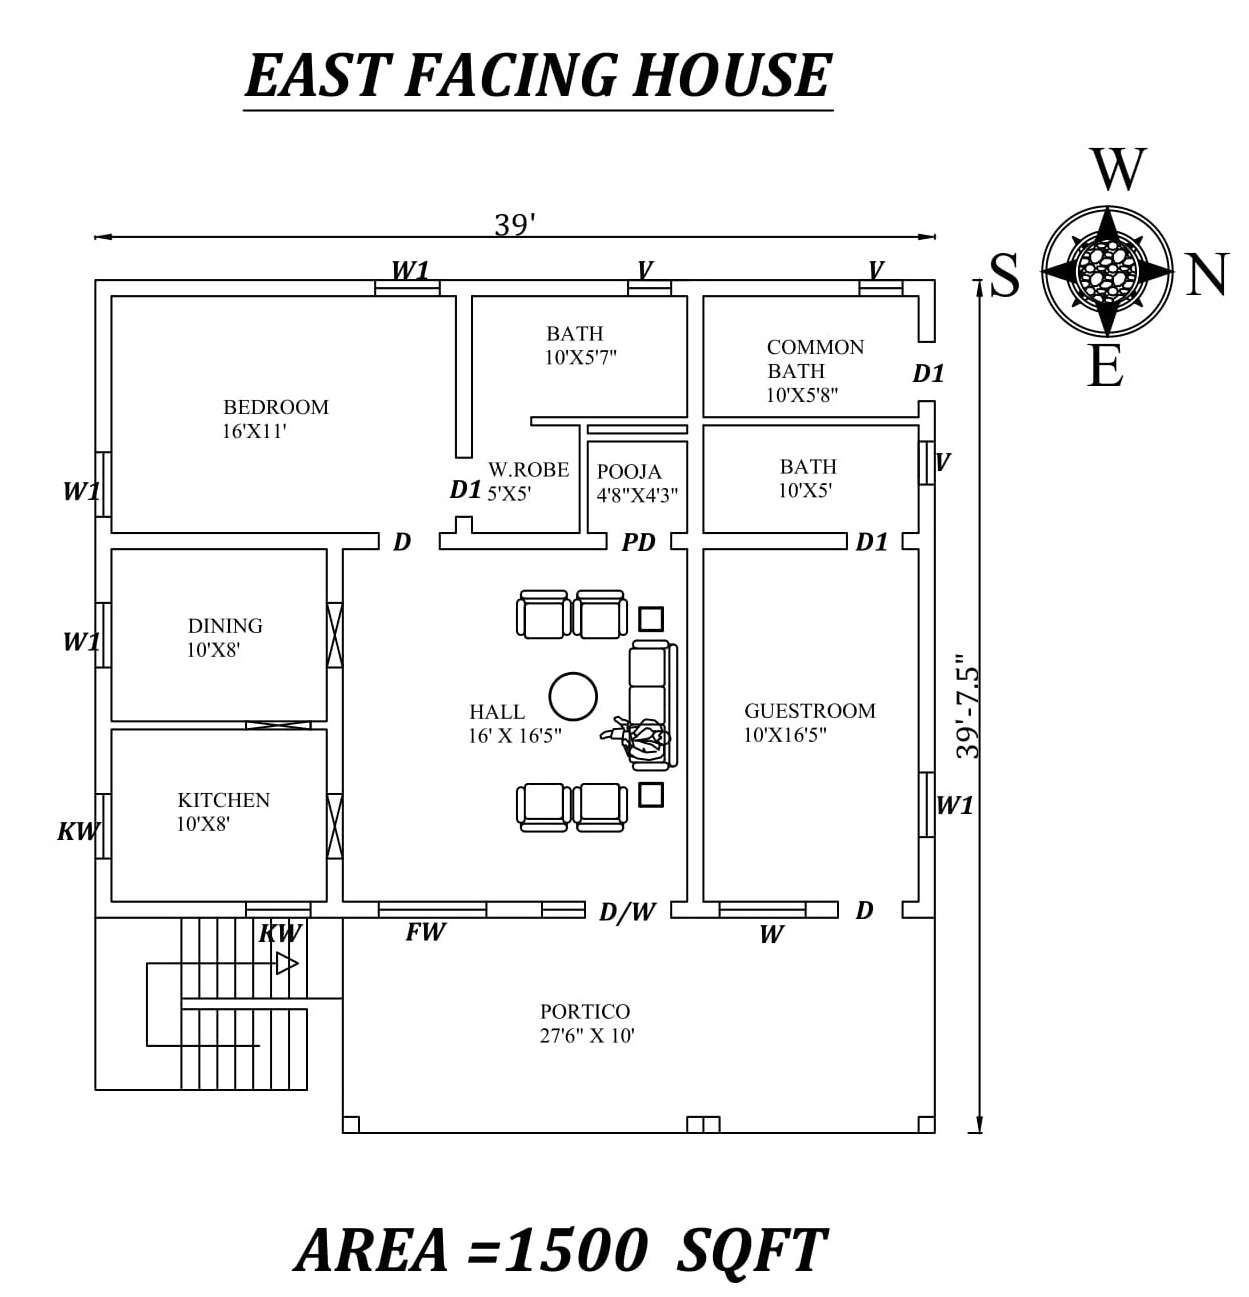 West Facing House Vastu Plan With Pooja Room 3D - jengordon288